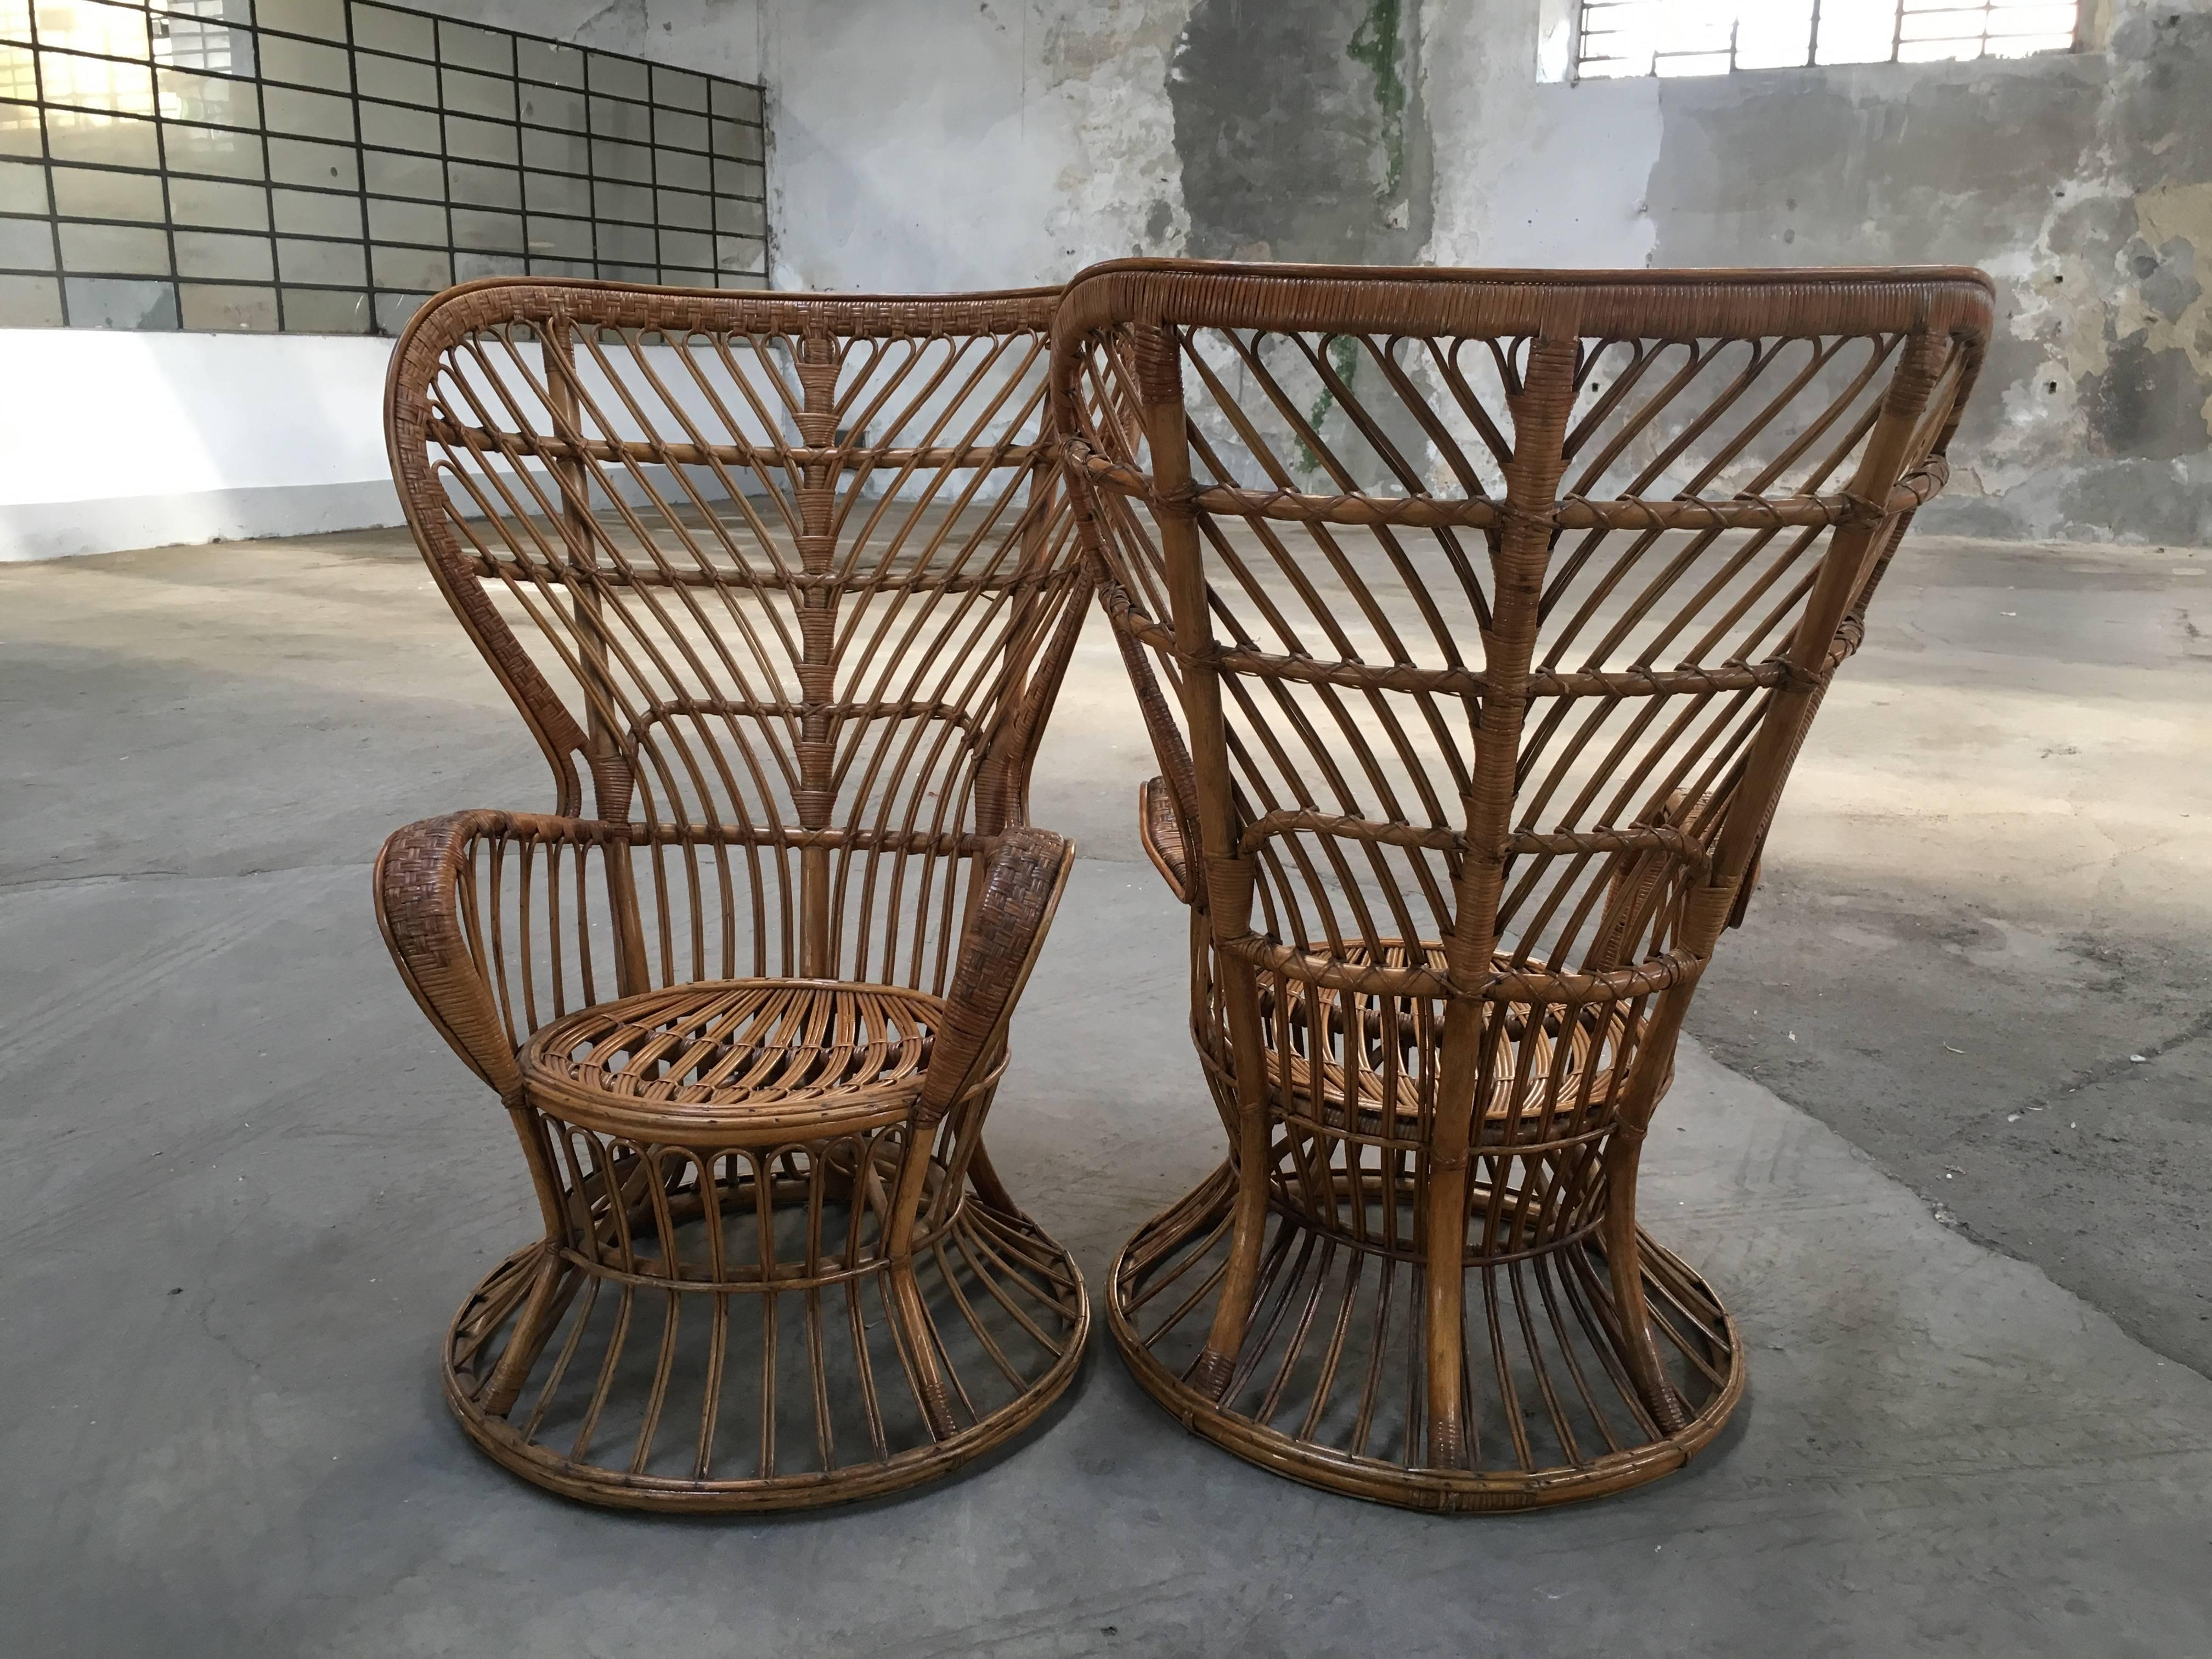 Mid-Century Modern Pair of Italian Rattan Chairs from 1940s by Lio Carminati for Bonacina